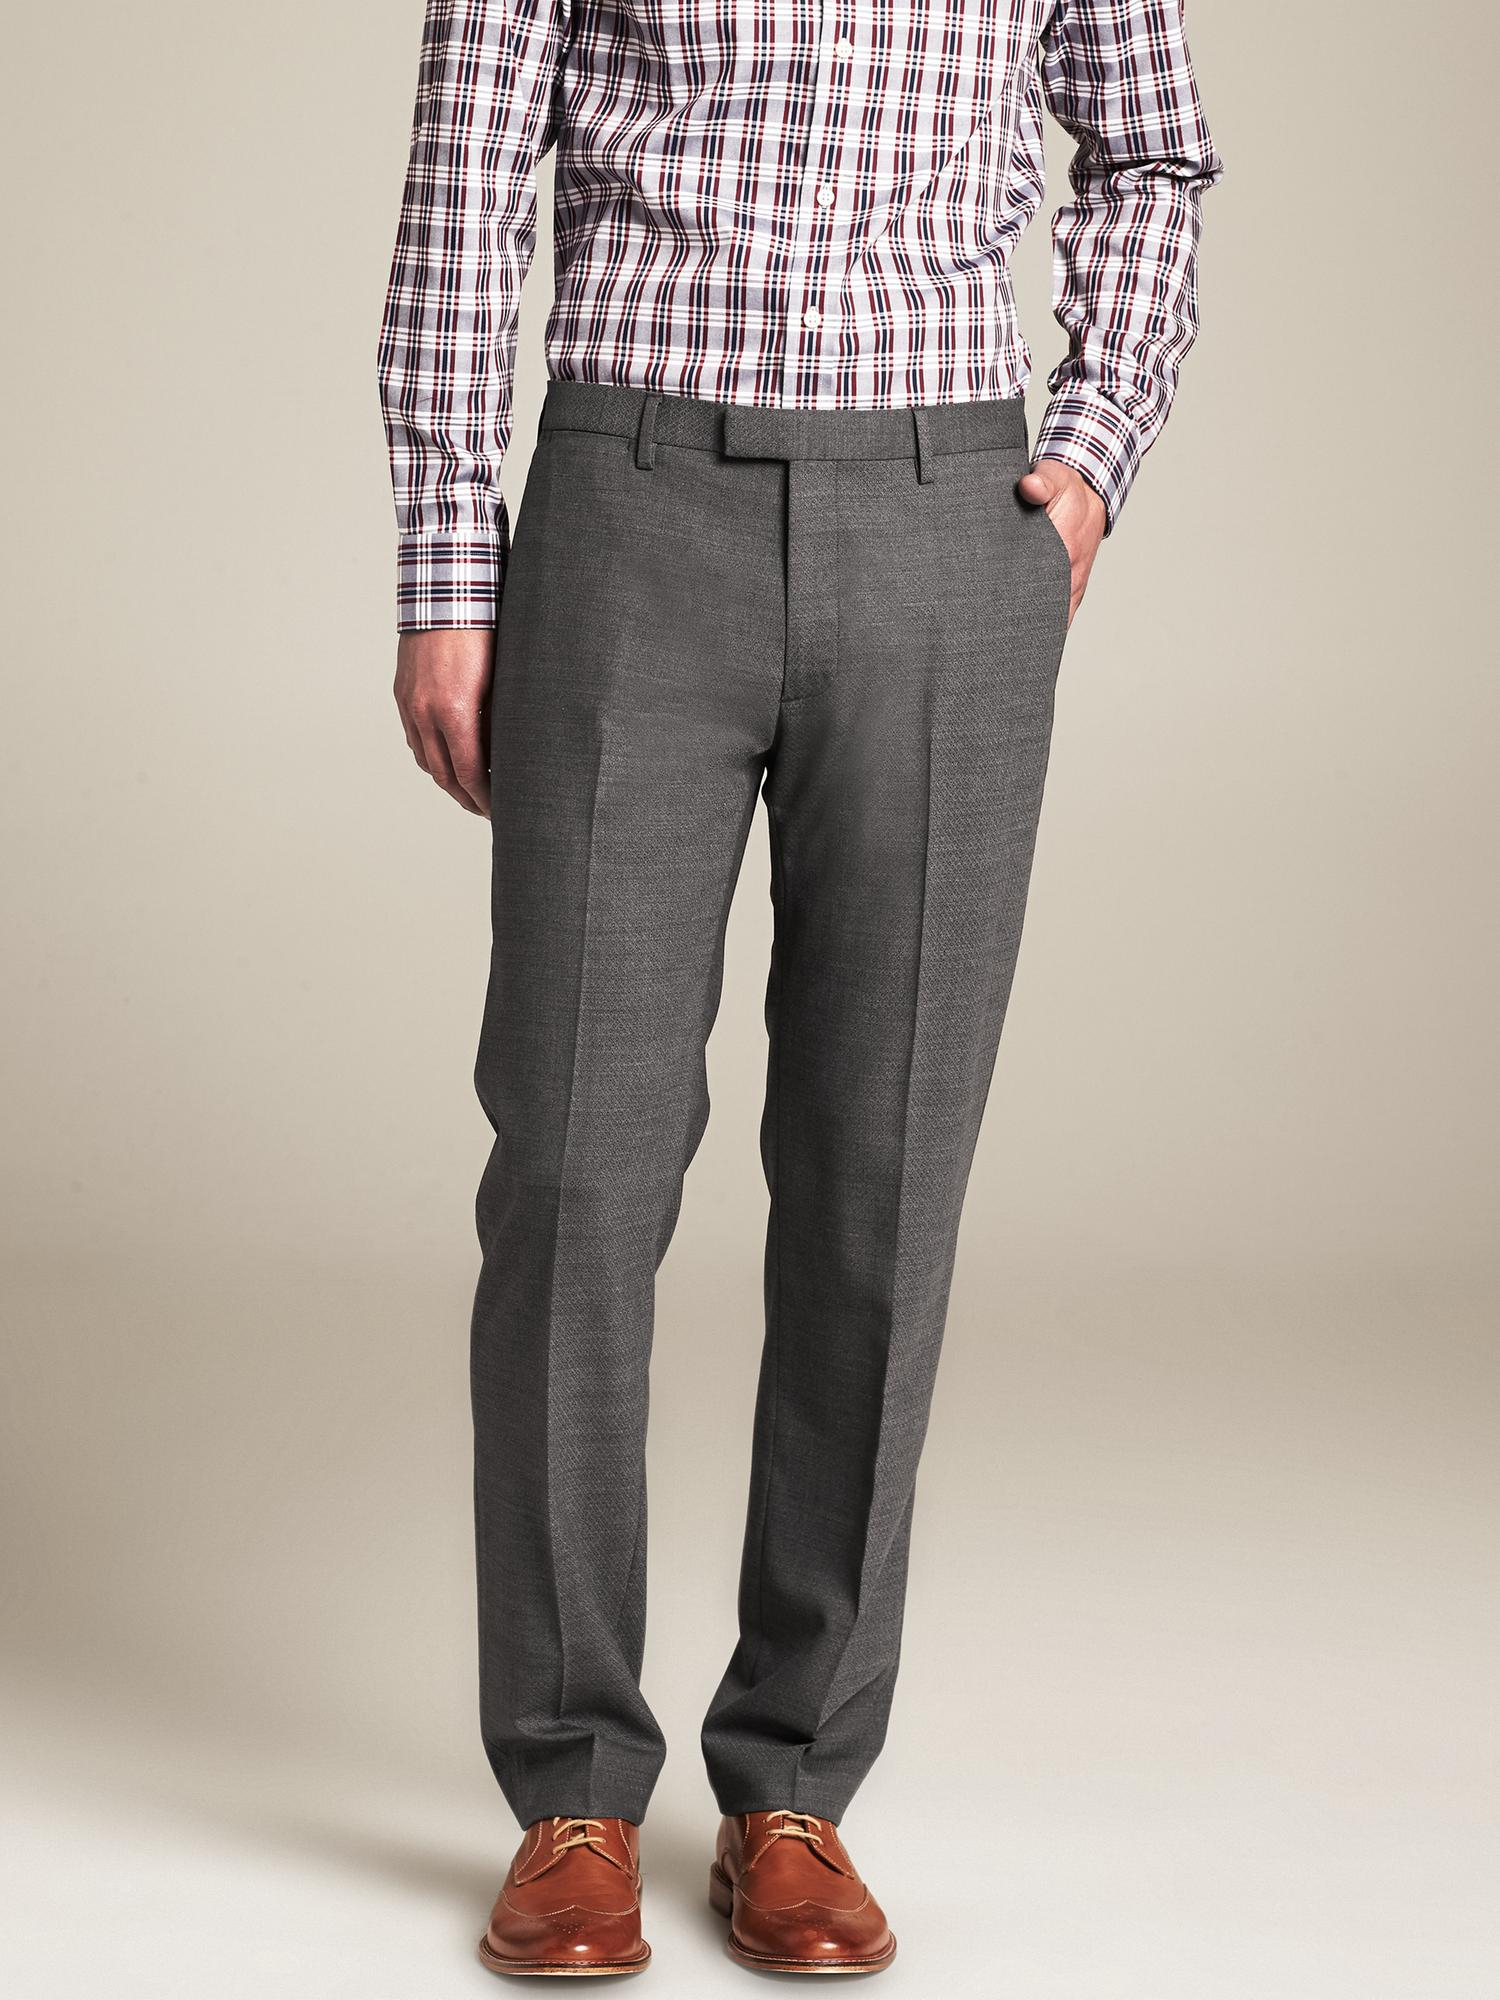 Banana Republic Modern Slim-Fit Gray Wool Dress Pant for Men - Lyst